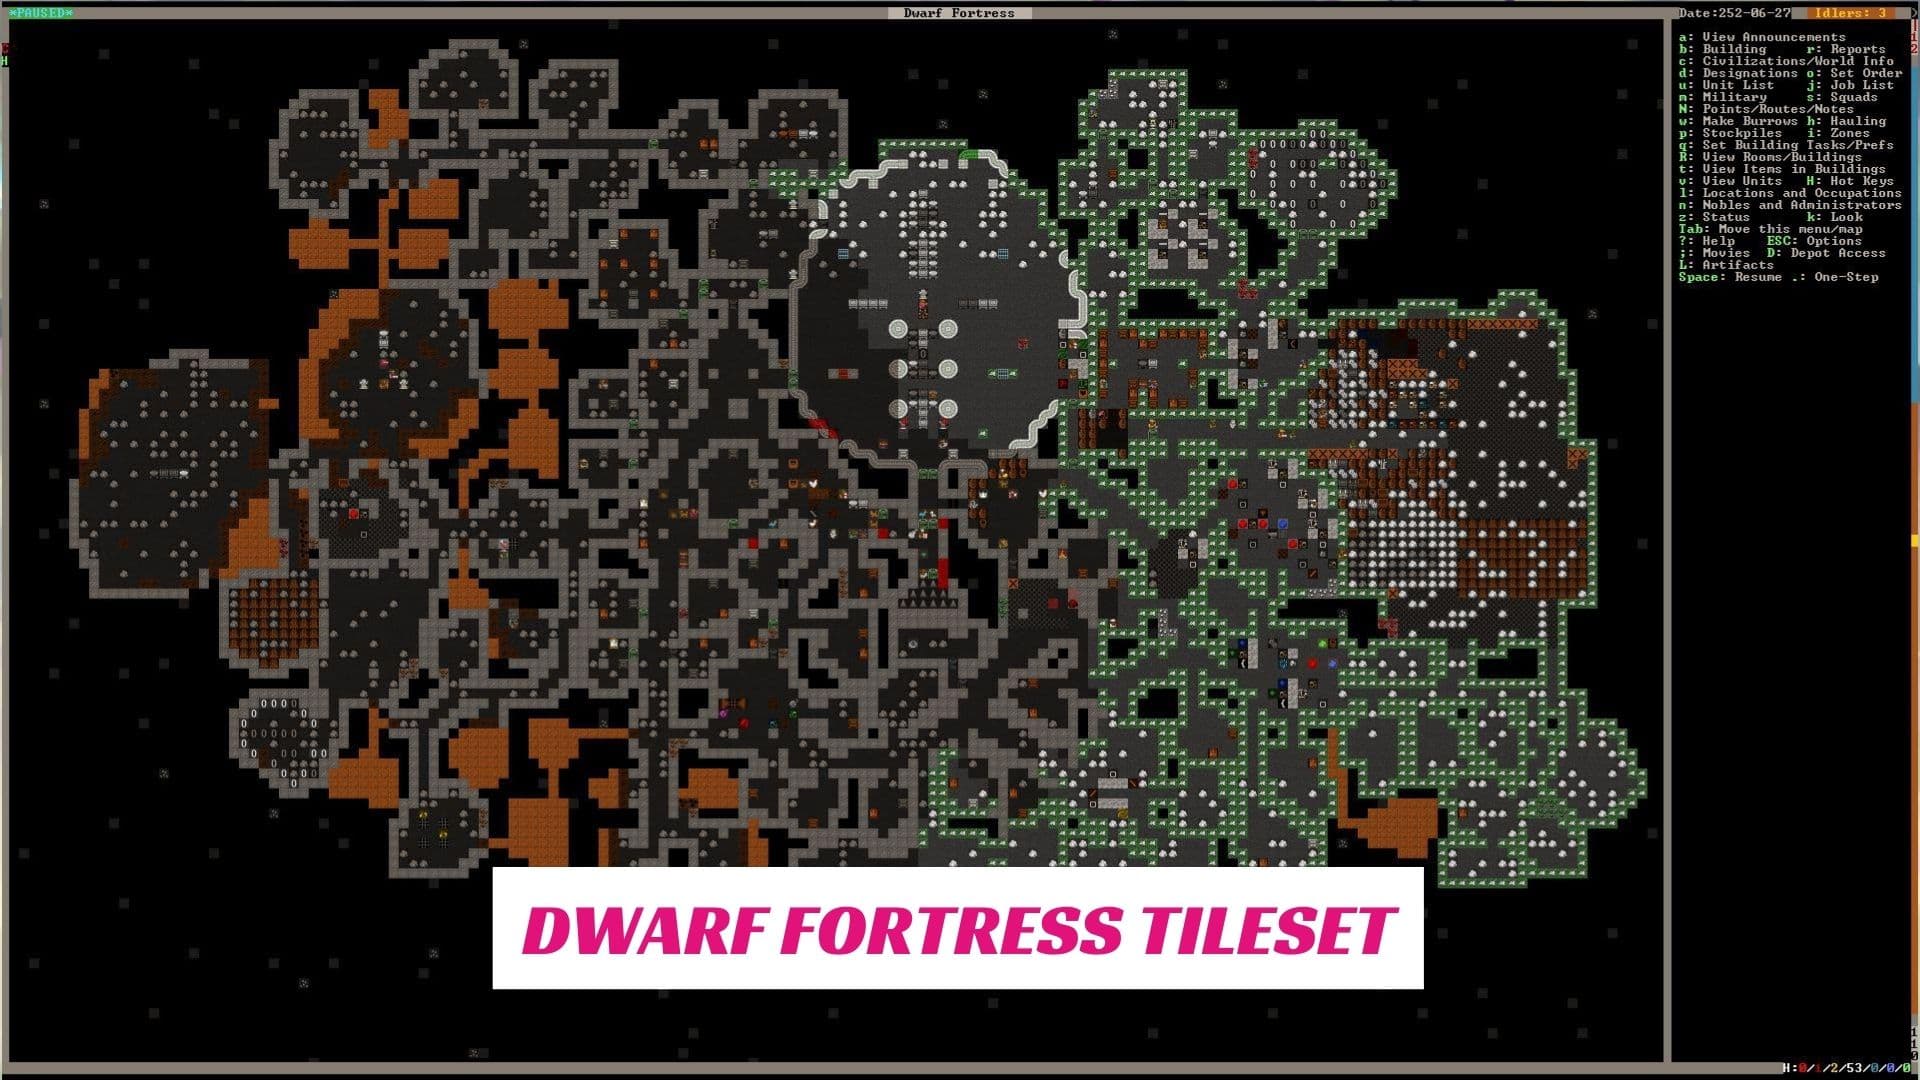 dwarf fortress starter pack 0.42.05